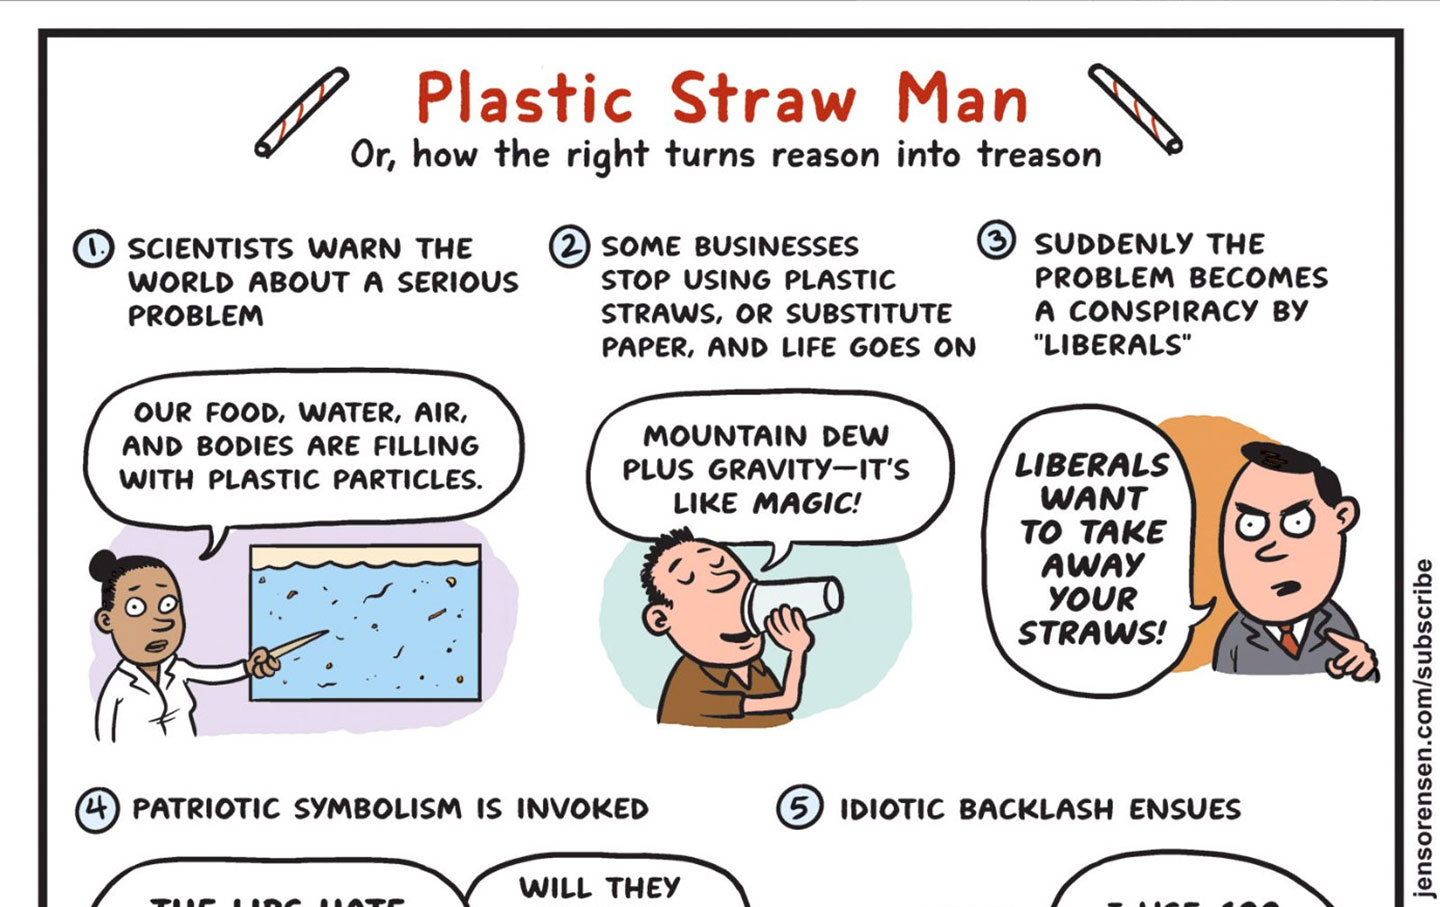 Plastic Straw Man